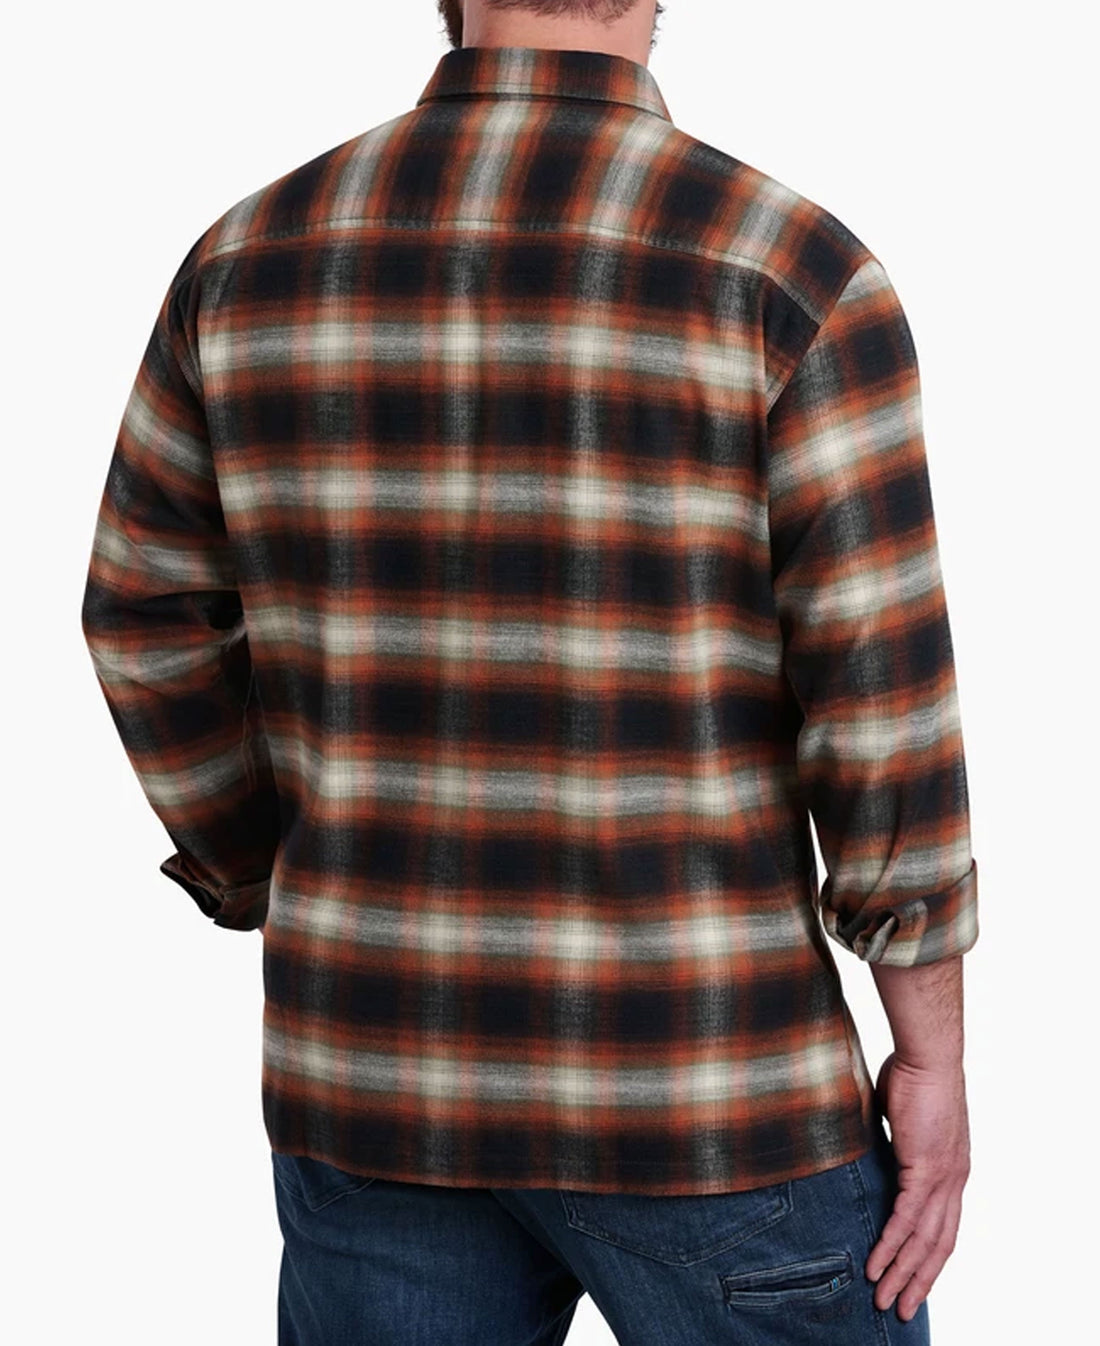 Kuhl Law Flannel Men's Shirt